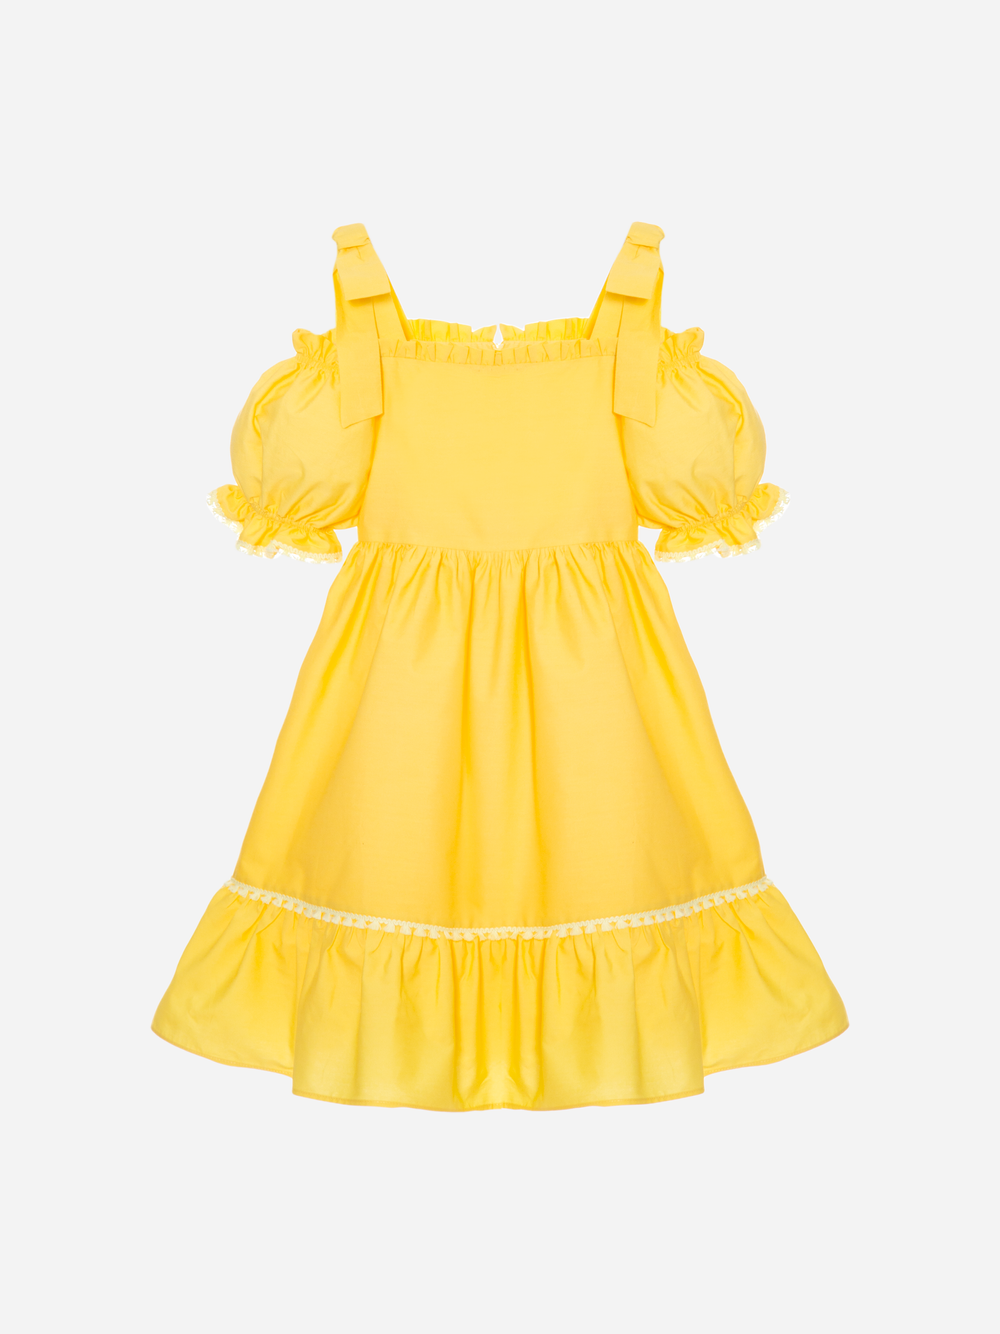 Girls yellow strapless dress